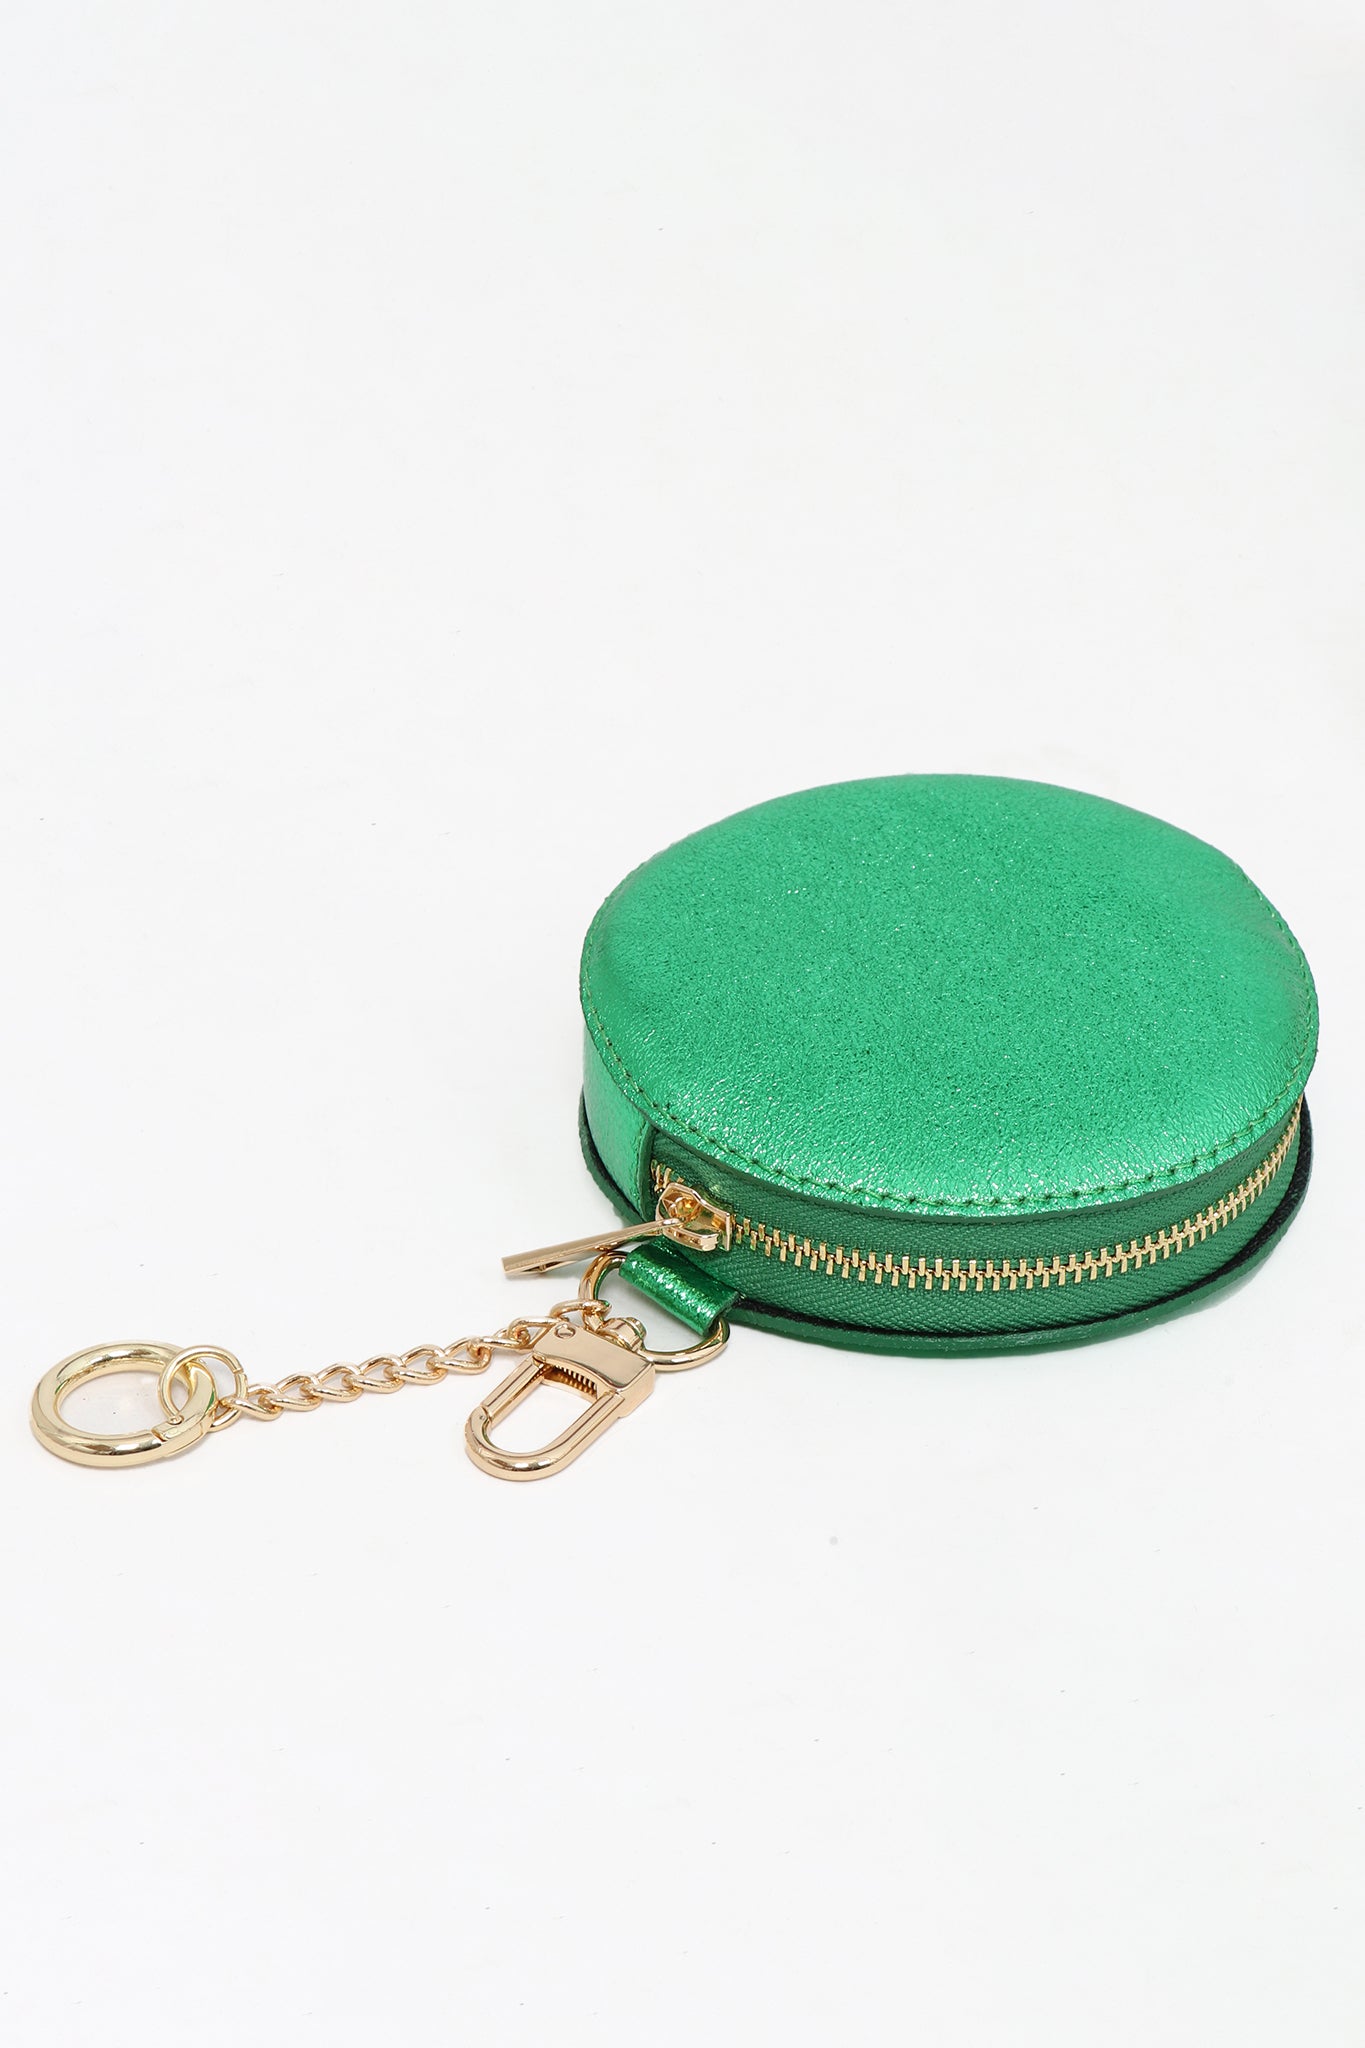 Agatha round coin purse amber | Make your own item | O bag